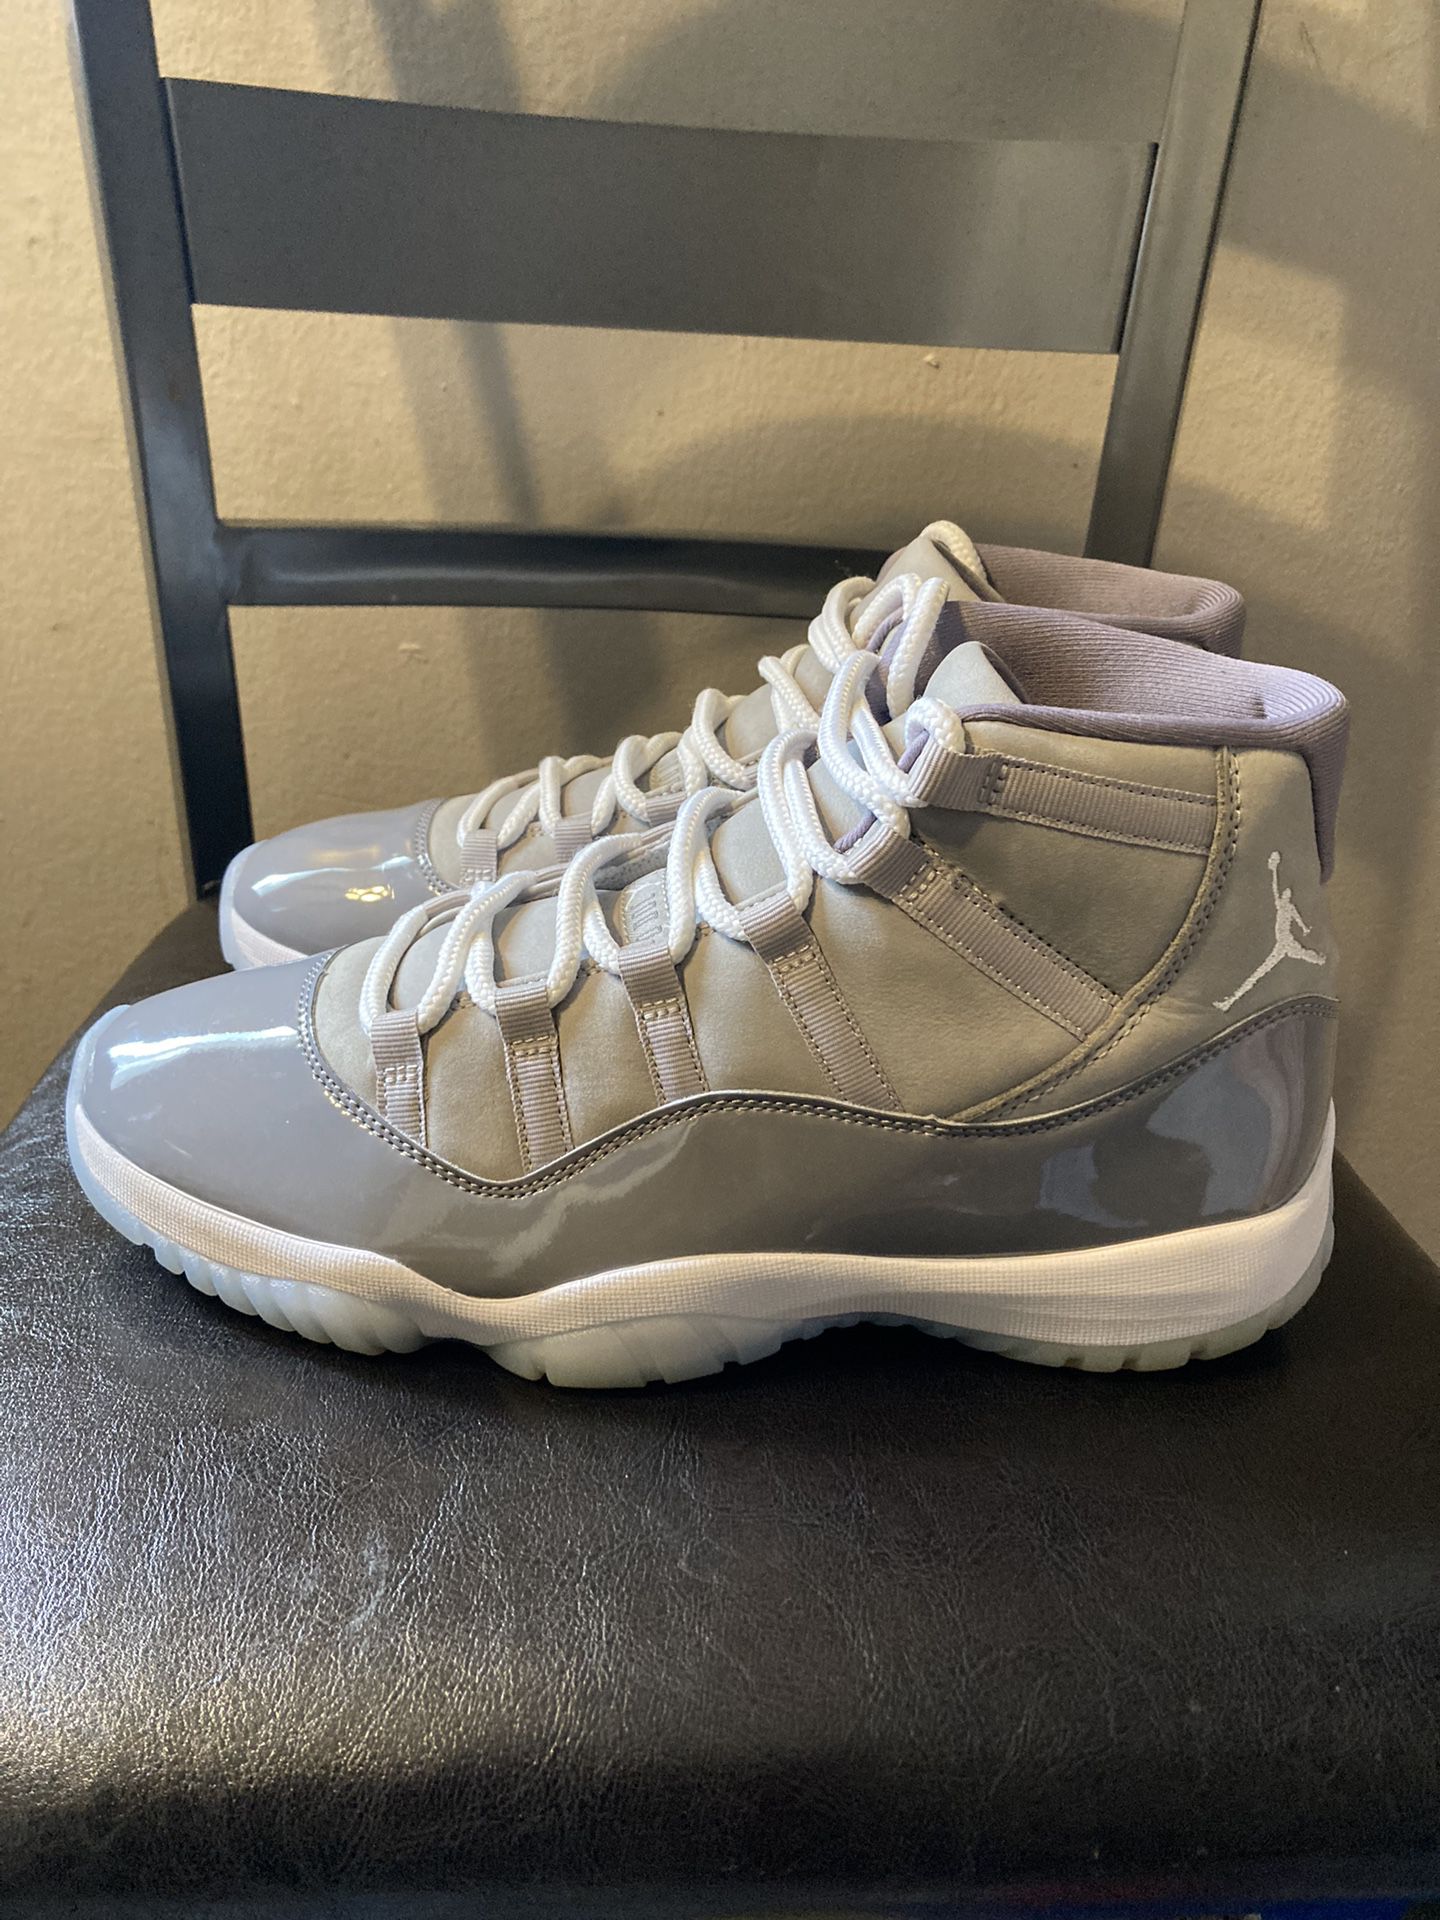 Jordan Cool Grey Size 11